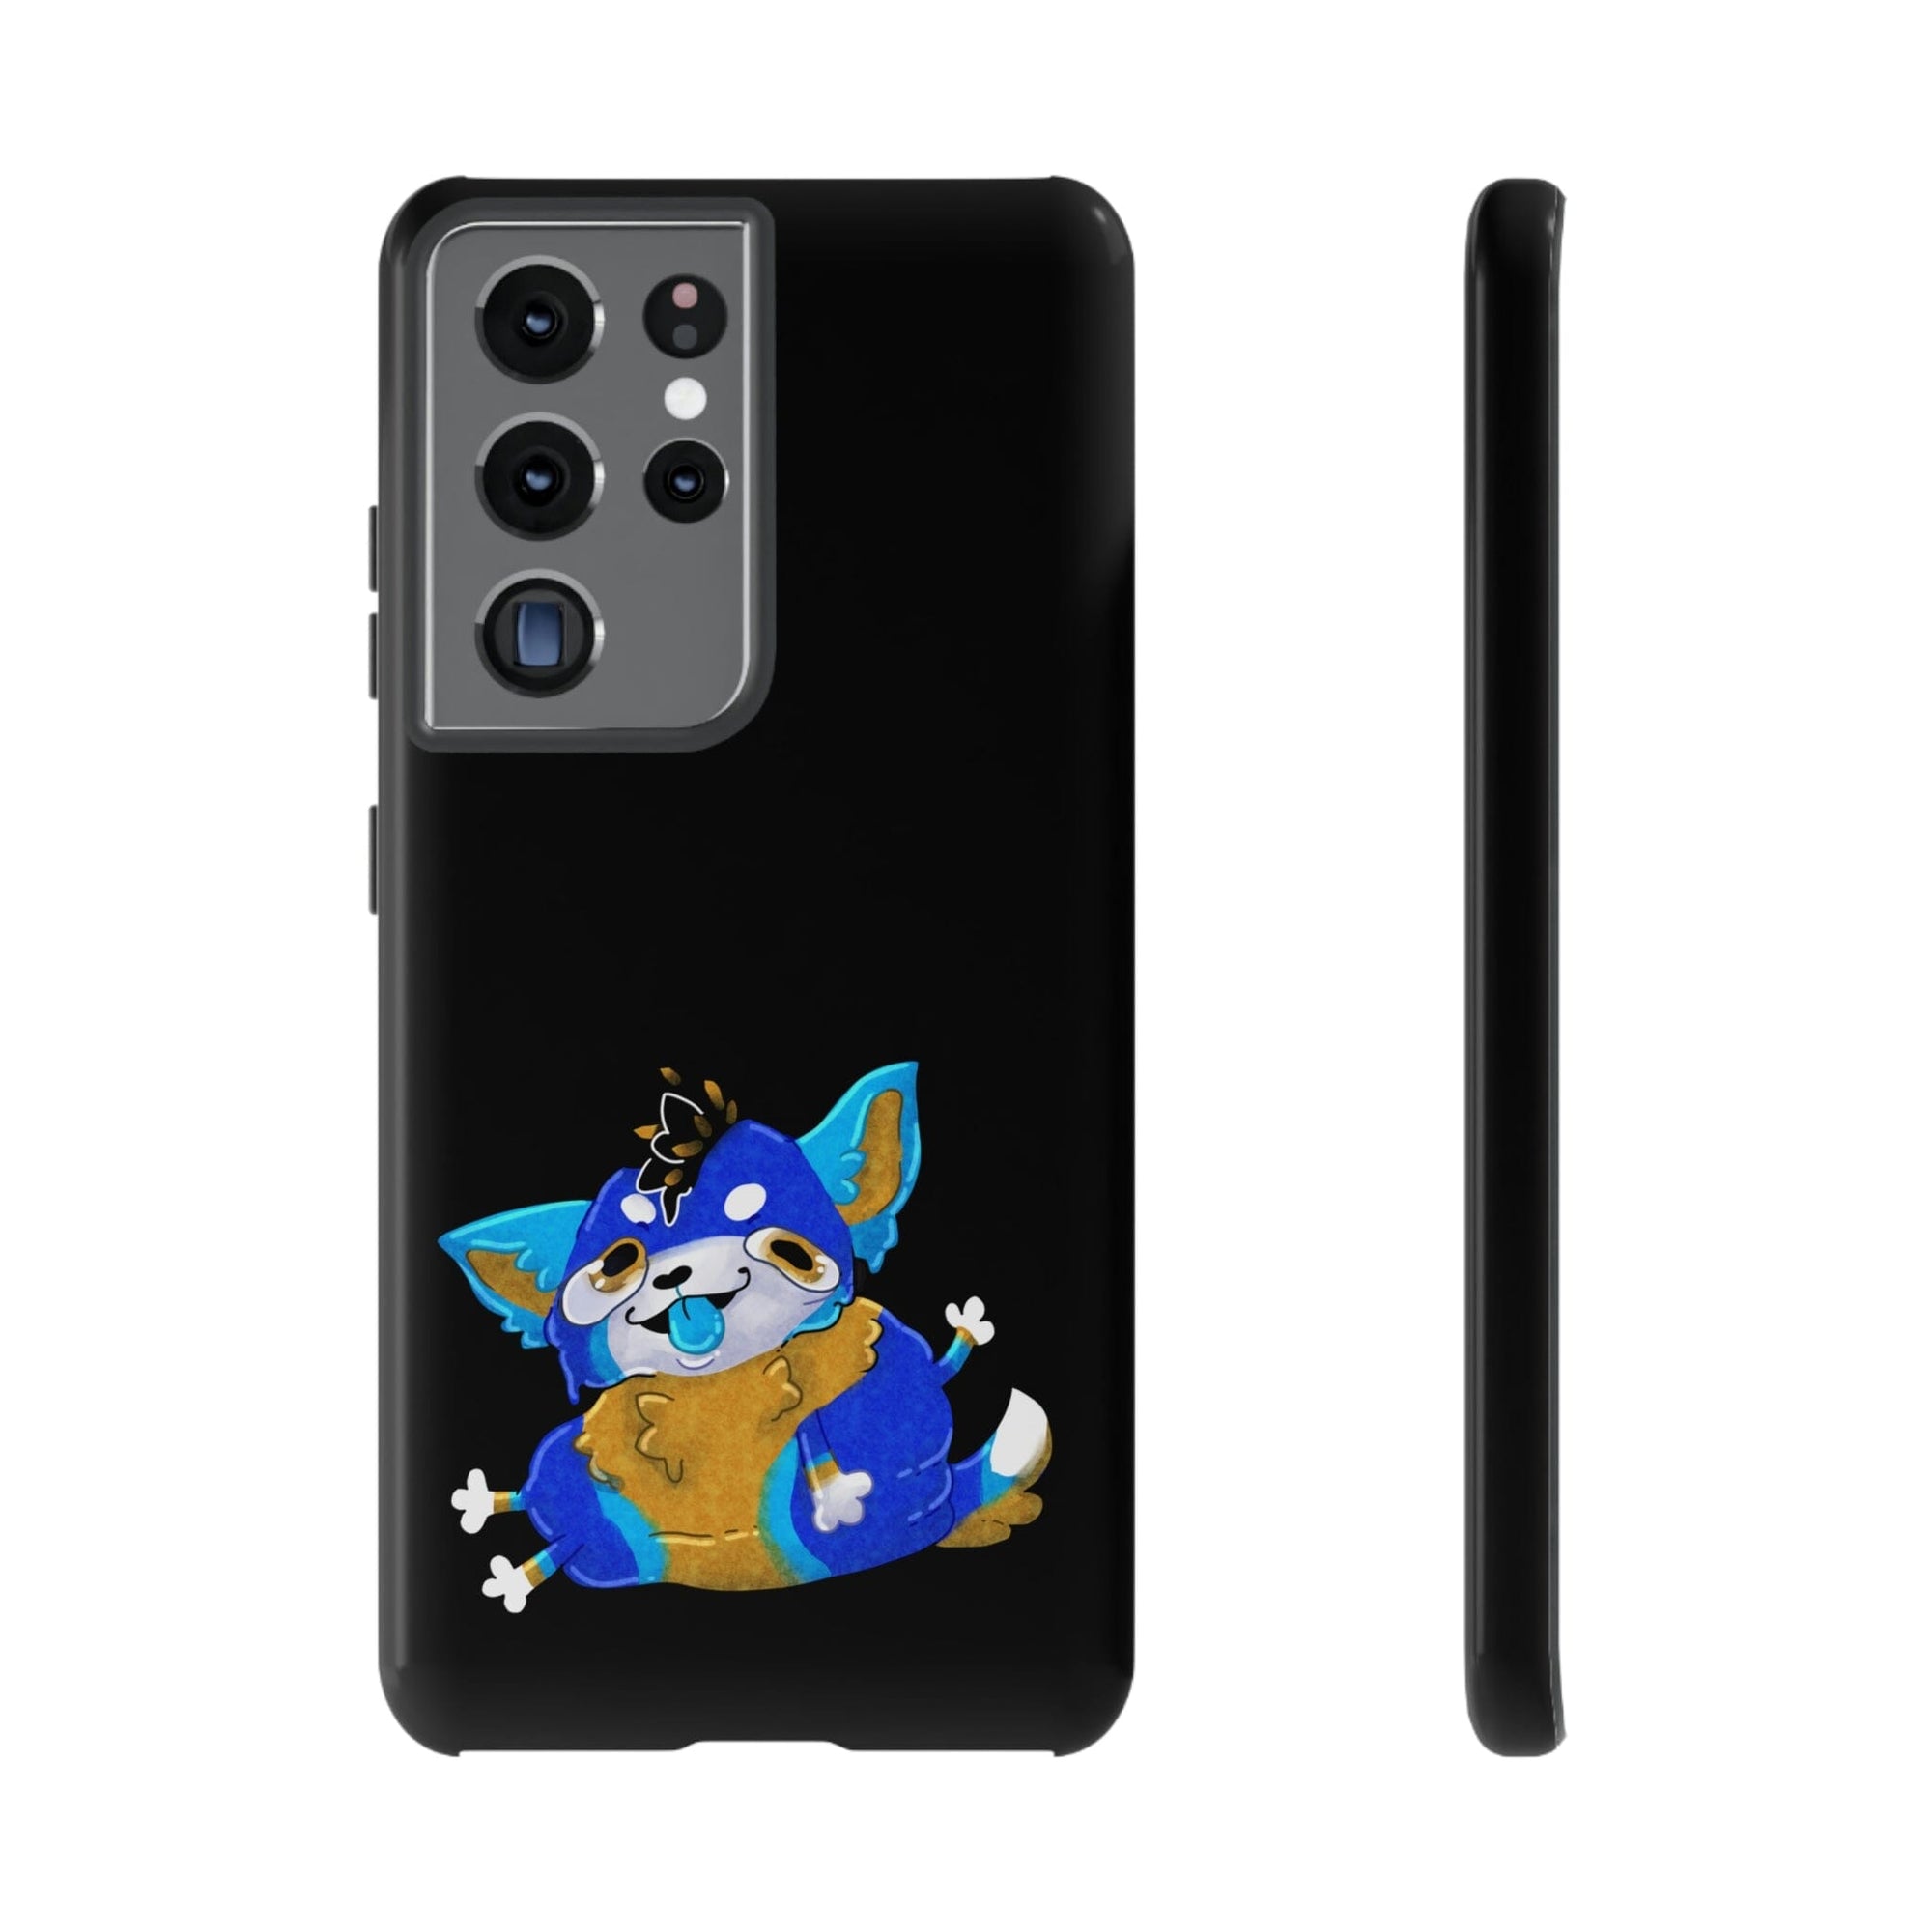 Hund The Hound - Hunderbaked - Phone Case Phone Case Printify Samsung Galaxy S21 Ultra Glossy 